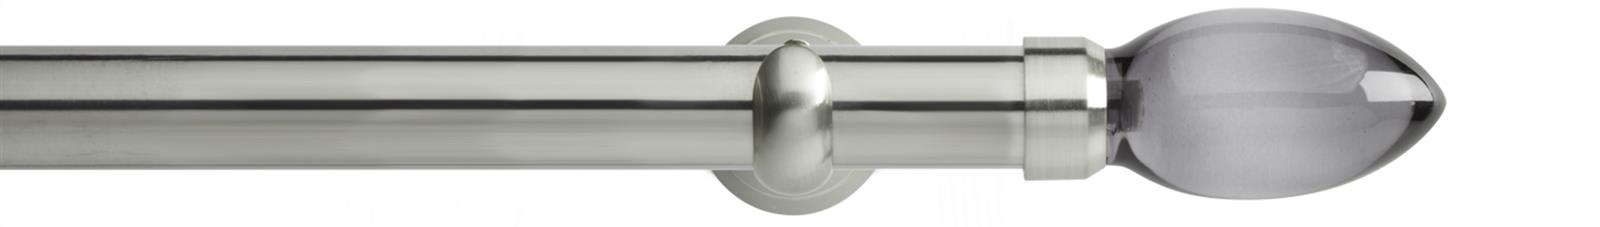 Neo Premium 28mm Eyelet Pole Stainless Steel Cup Smoke Grey Teardrop